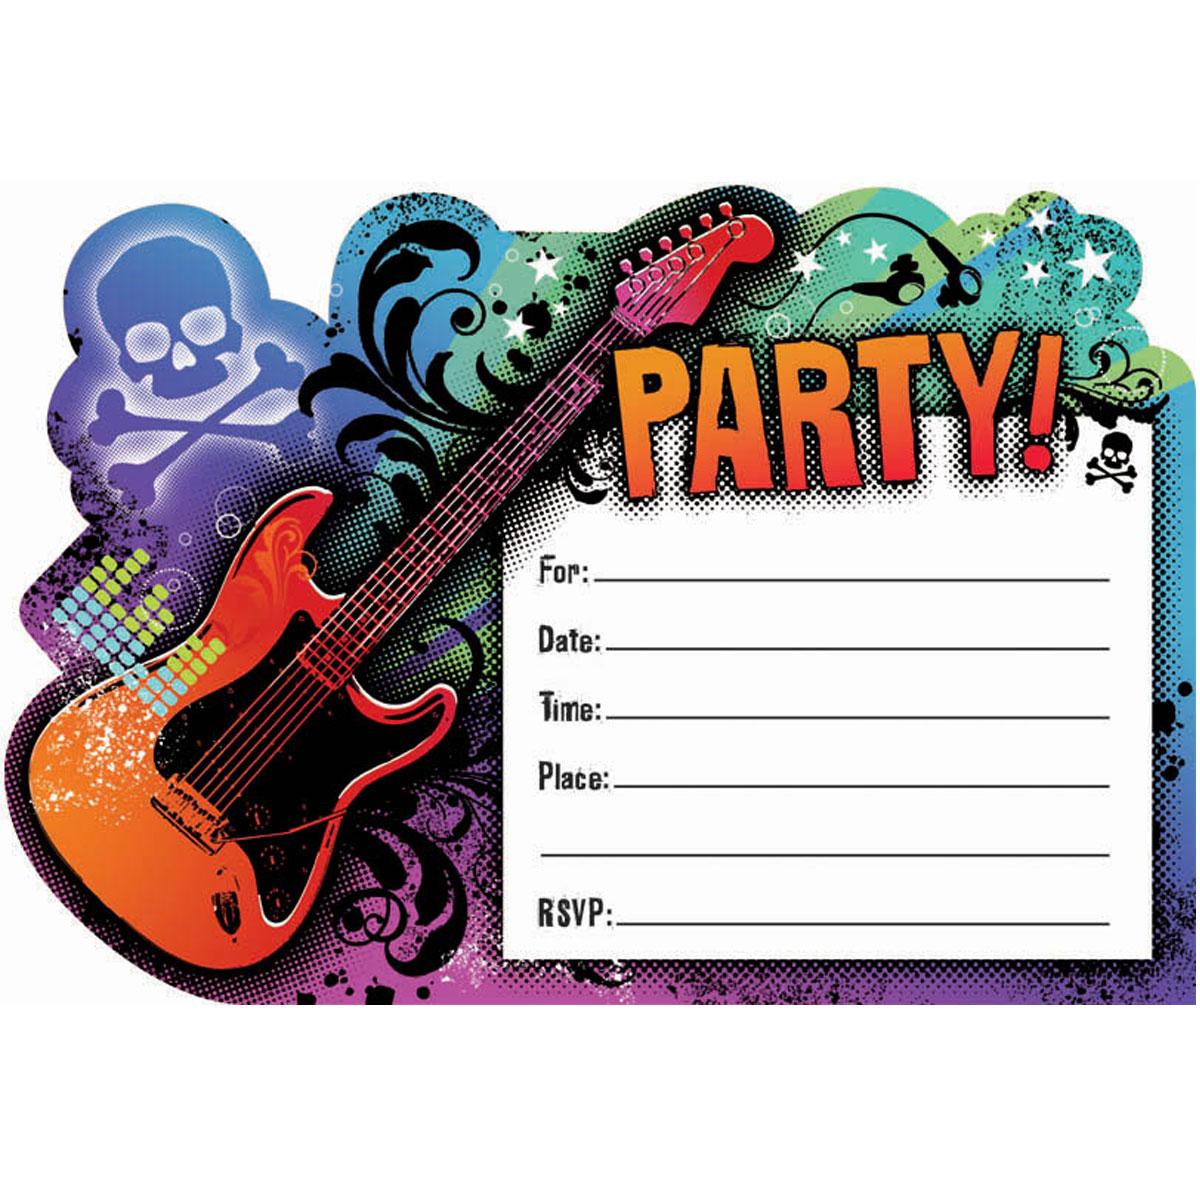 Rock Star Postcard Invitations 20pcs Party Accessories - Party Centre